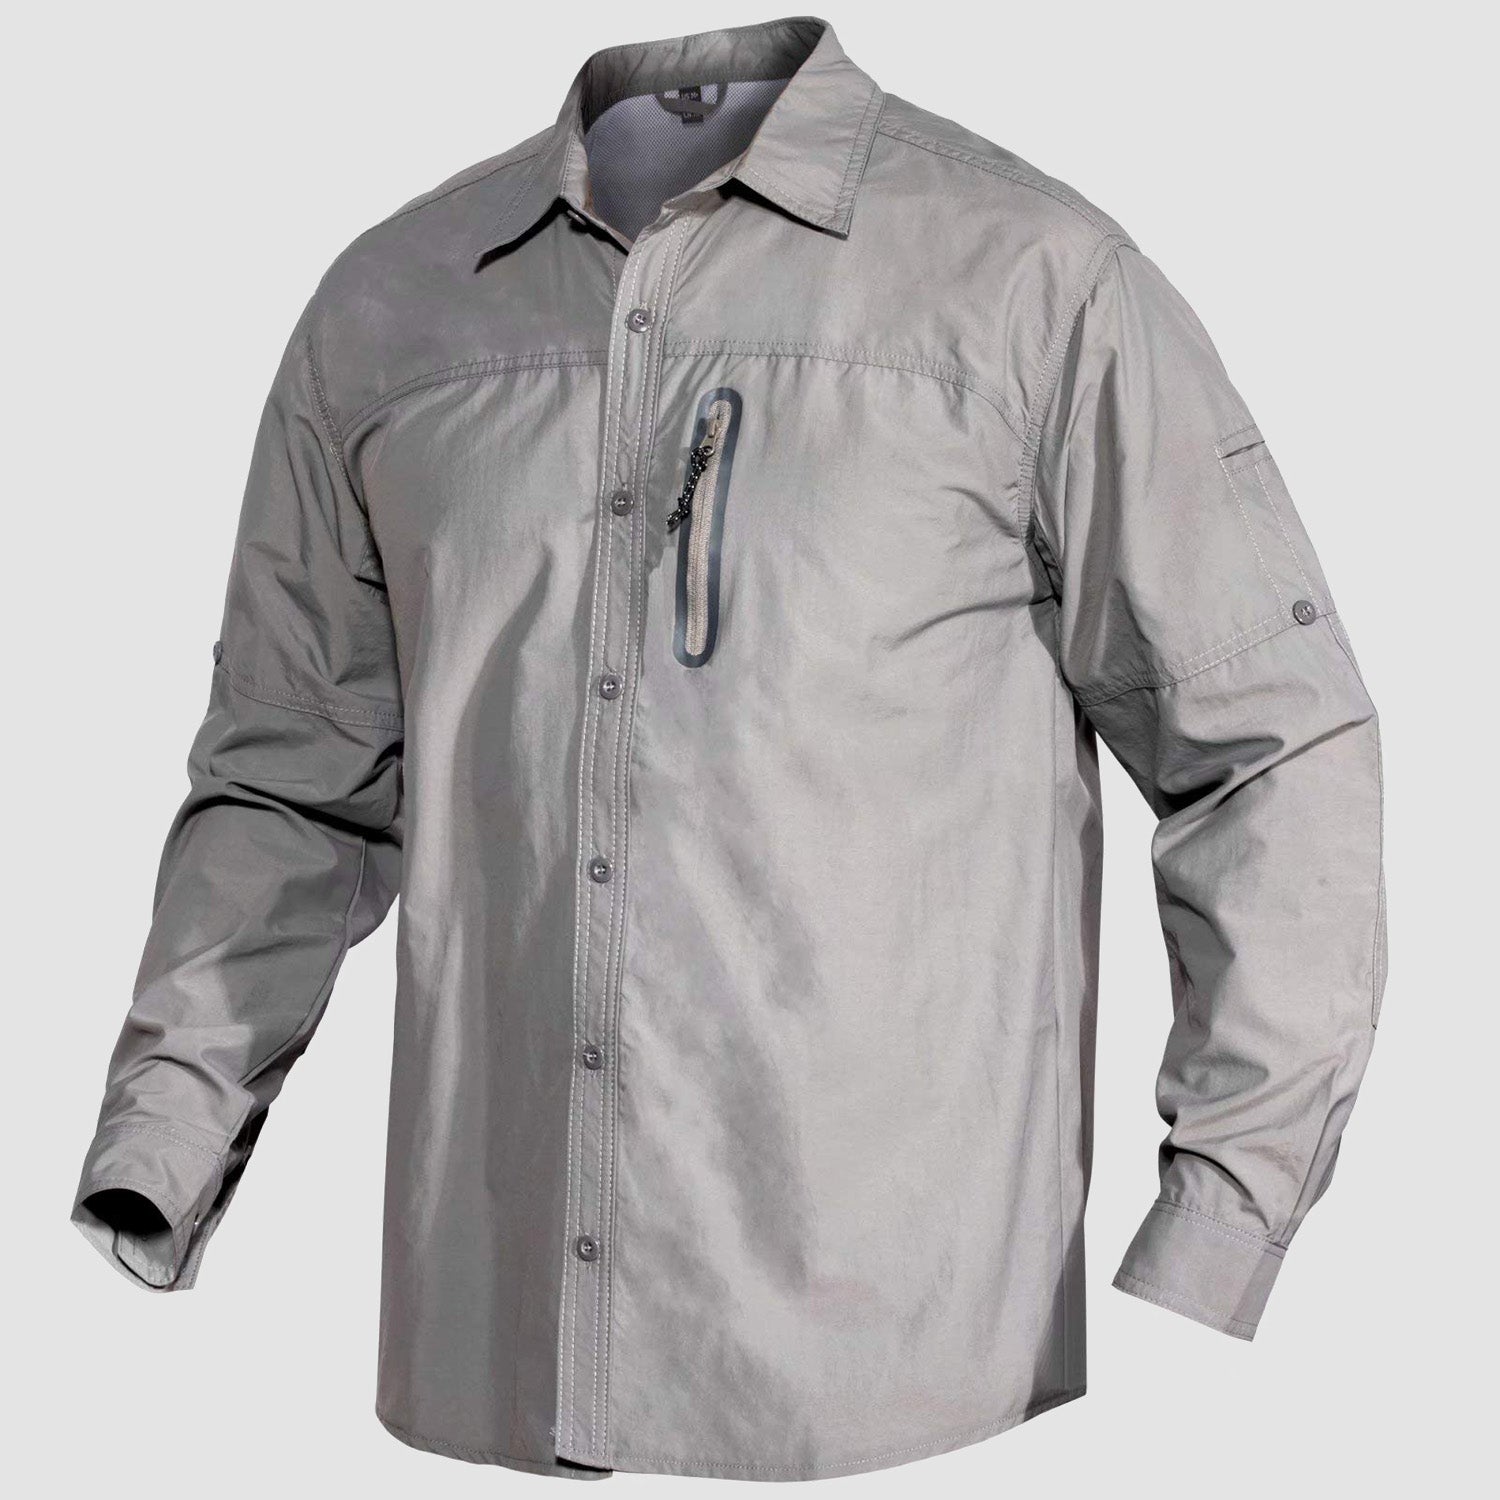 Men's Hiking Shirts with Zipper Pocket Long Sleeve Fishing Work Shirts